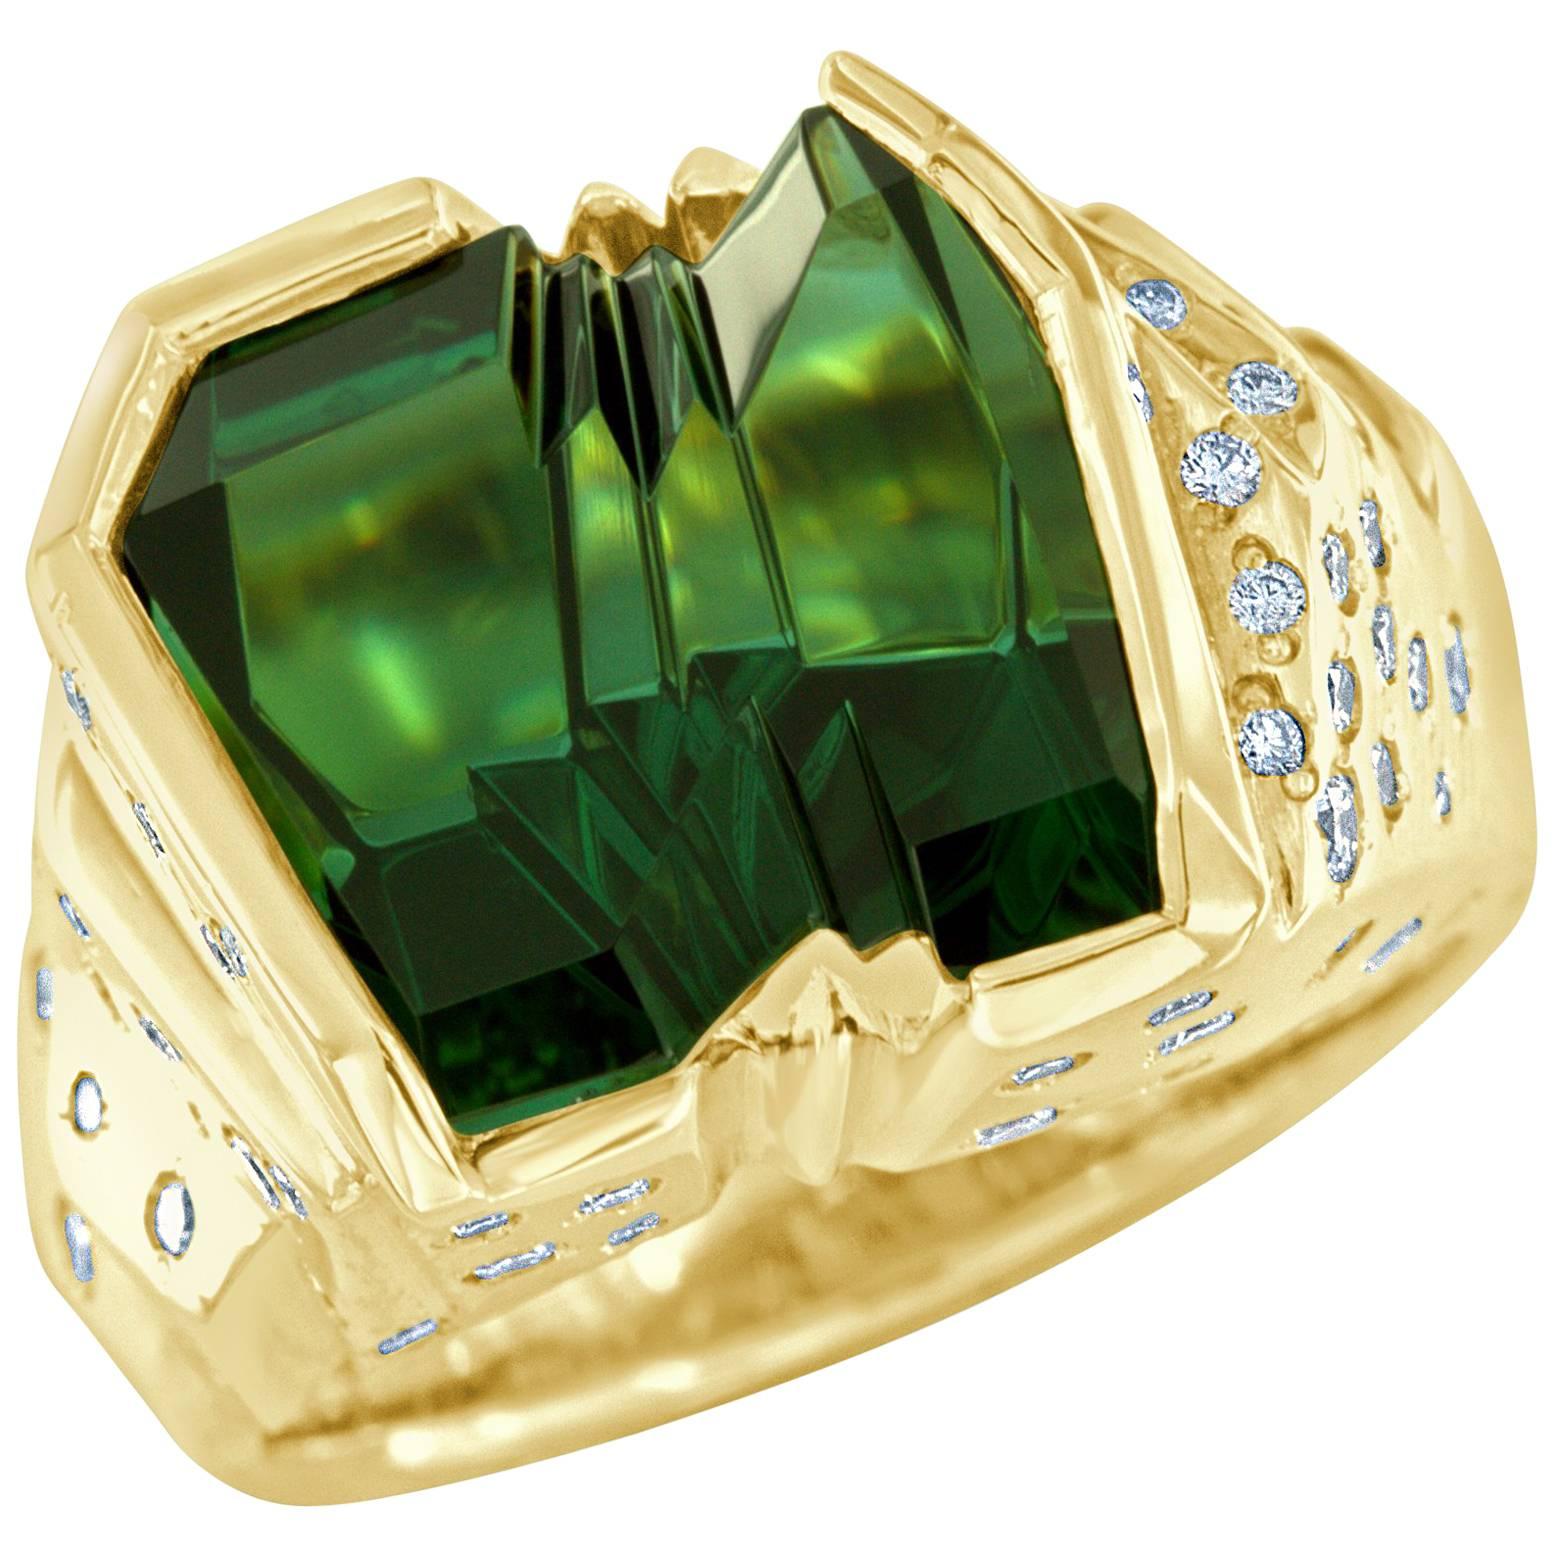 Bernd Munsteiner 6.93 Carat Green Tourmaline and Diamond Gold Ring